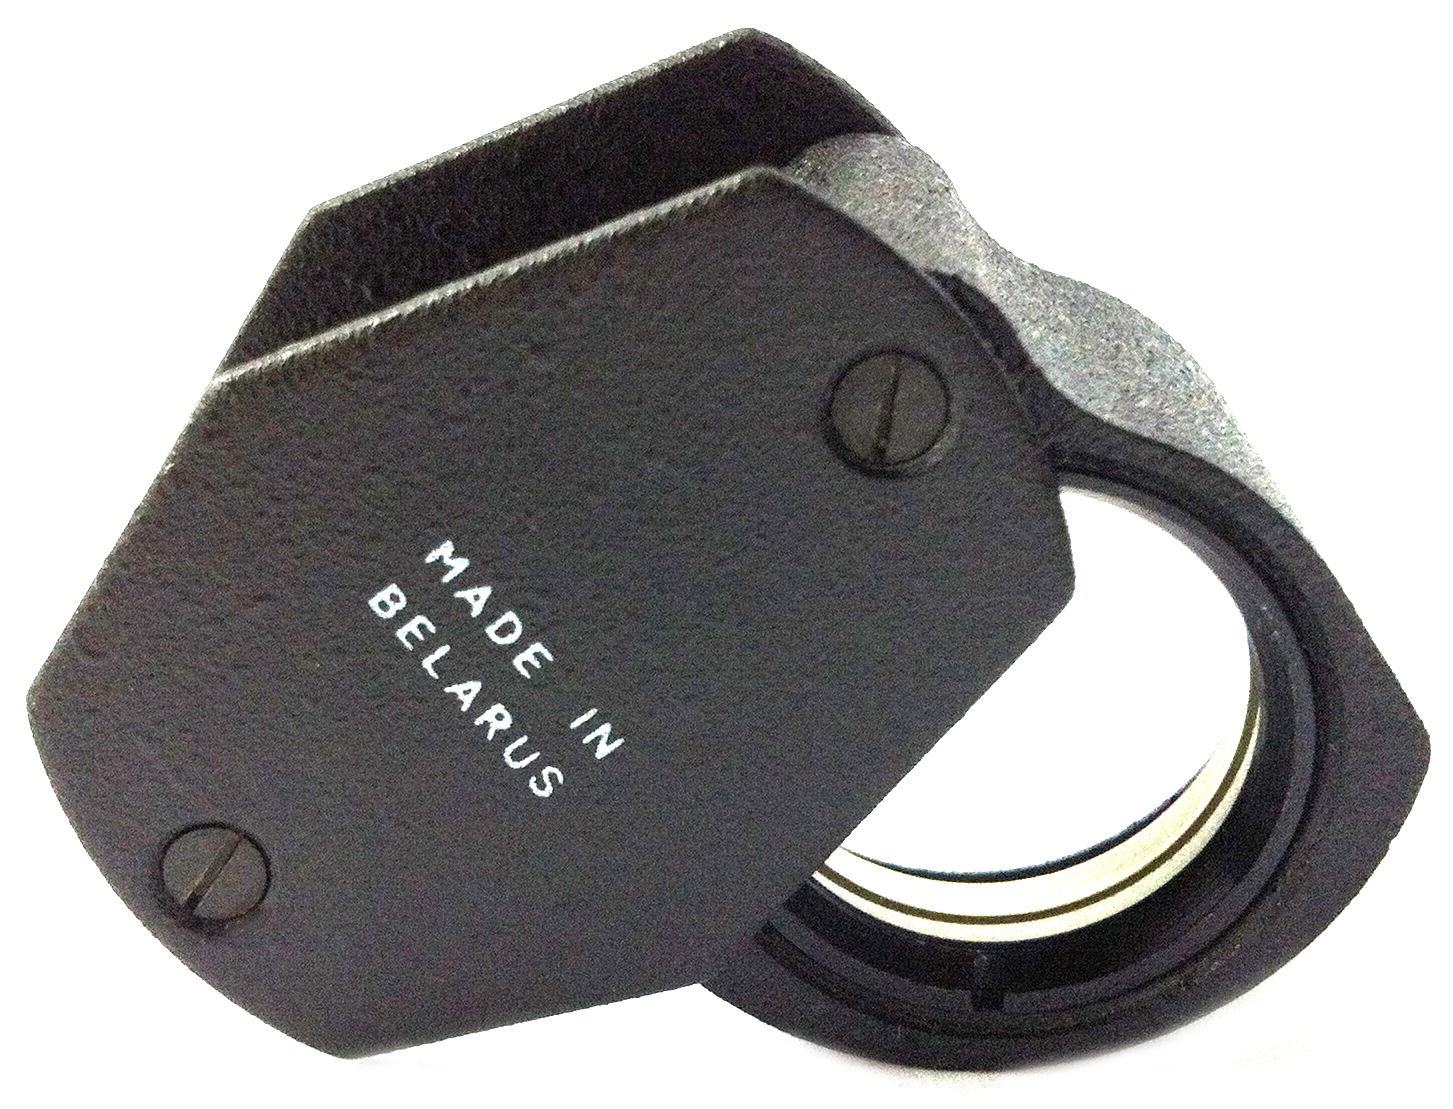 BelOMO 10x Triplet Loupe Folding Magnifier 